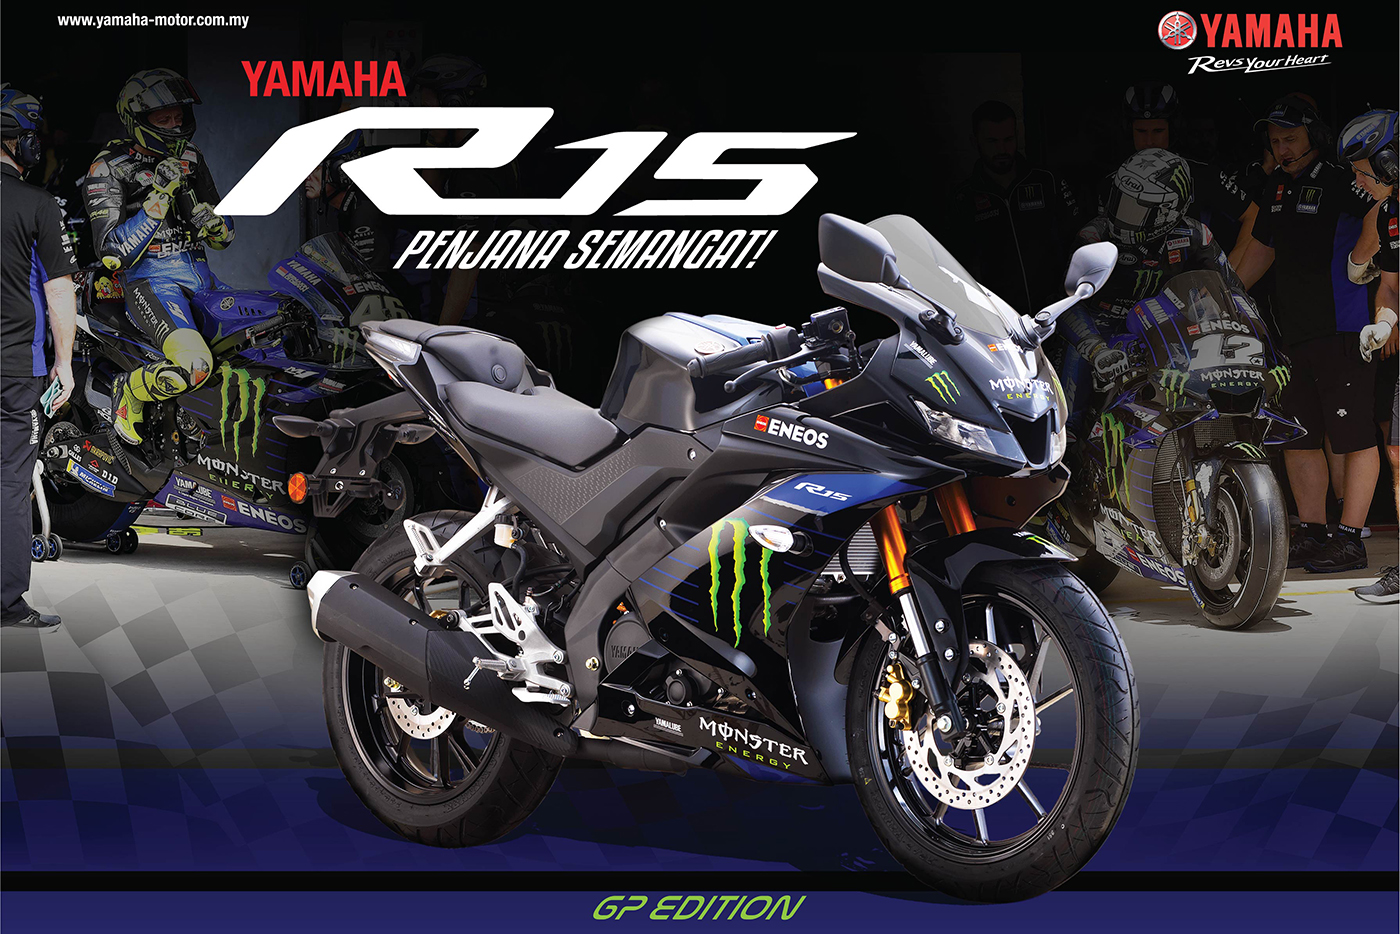 2019-yamaha-yzf-r15-monster-limited-edition-brochure-2.jpg